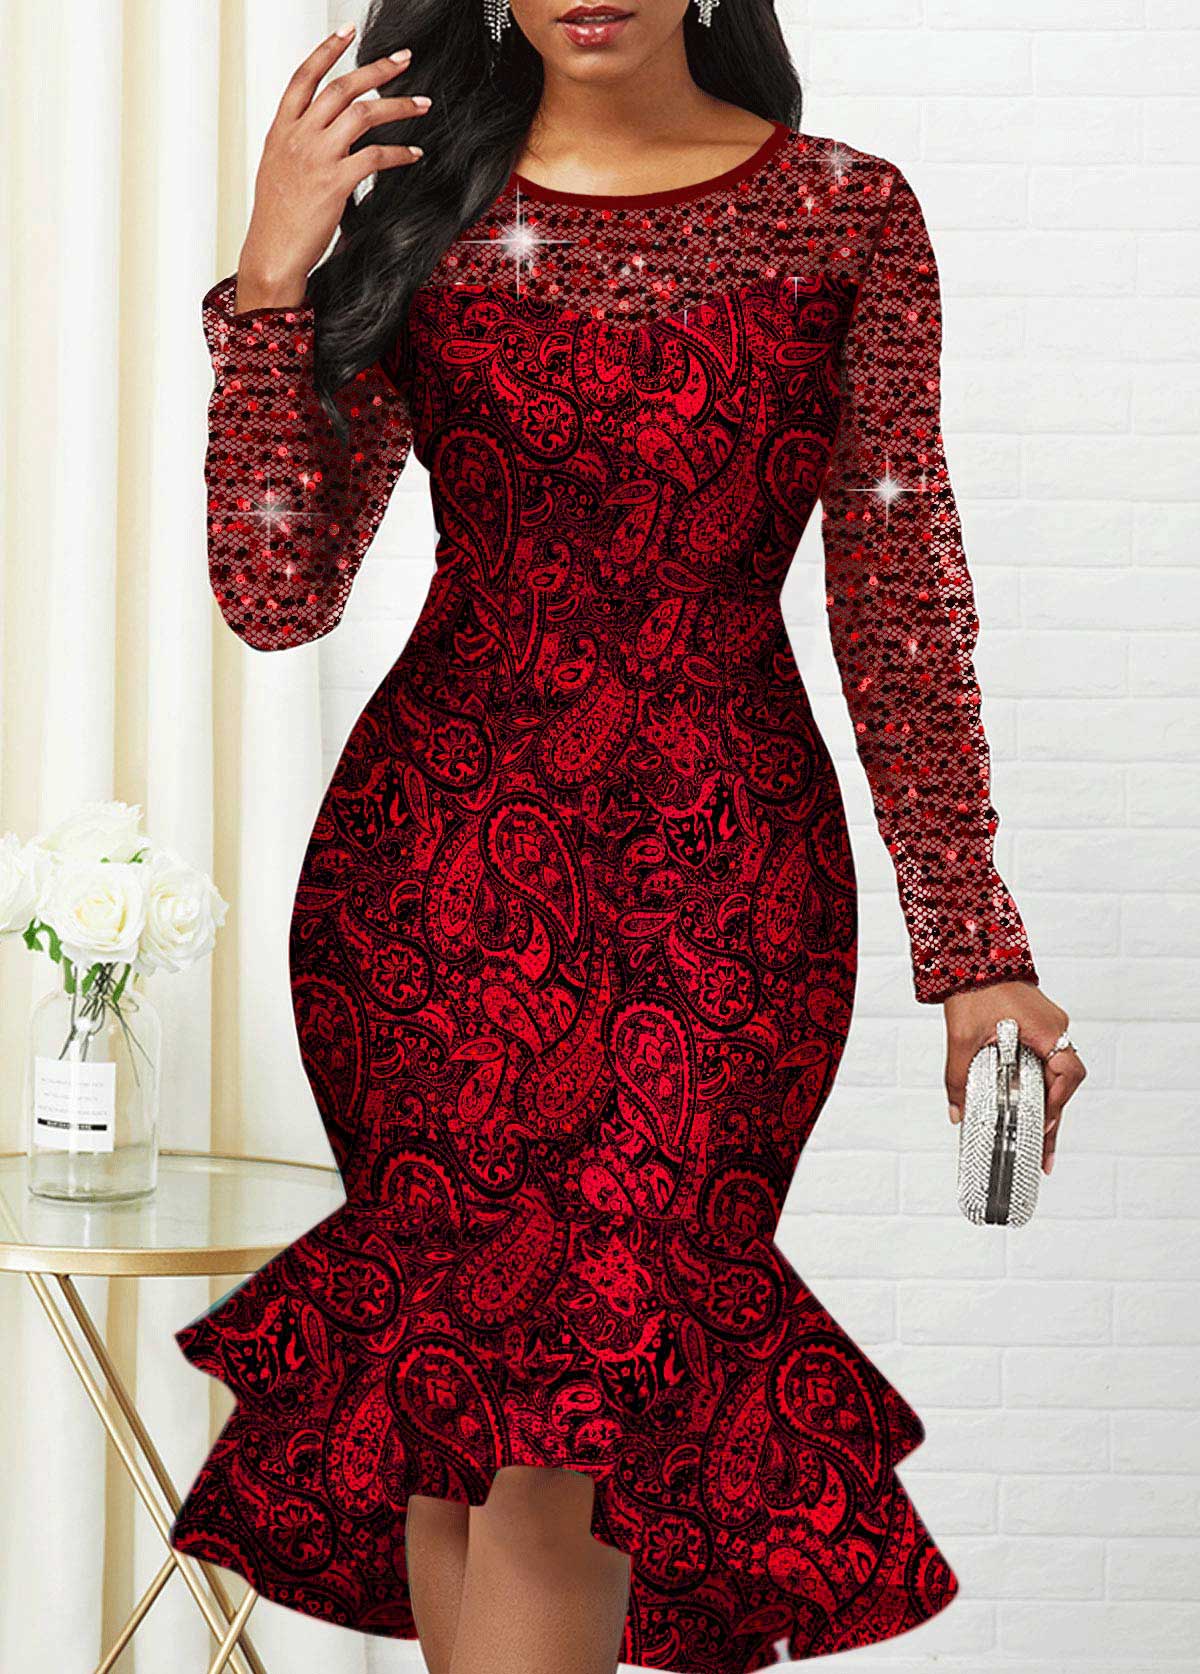 ROTITA Sequin Red Paisley Print Glitter Mermaid Dress